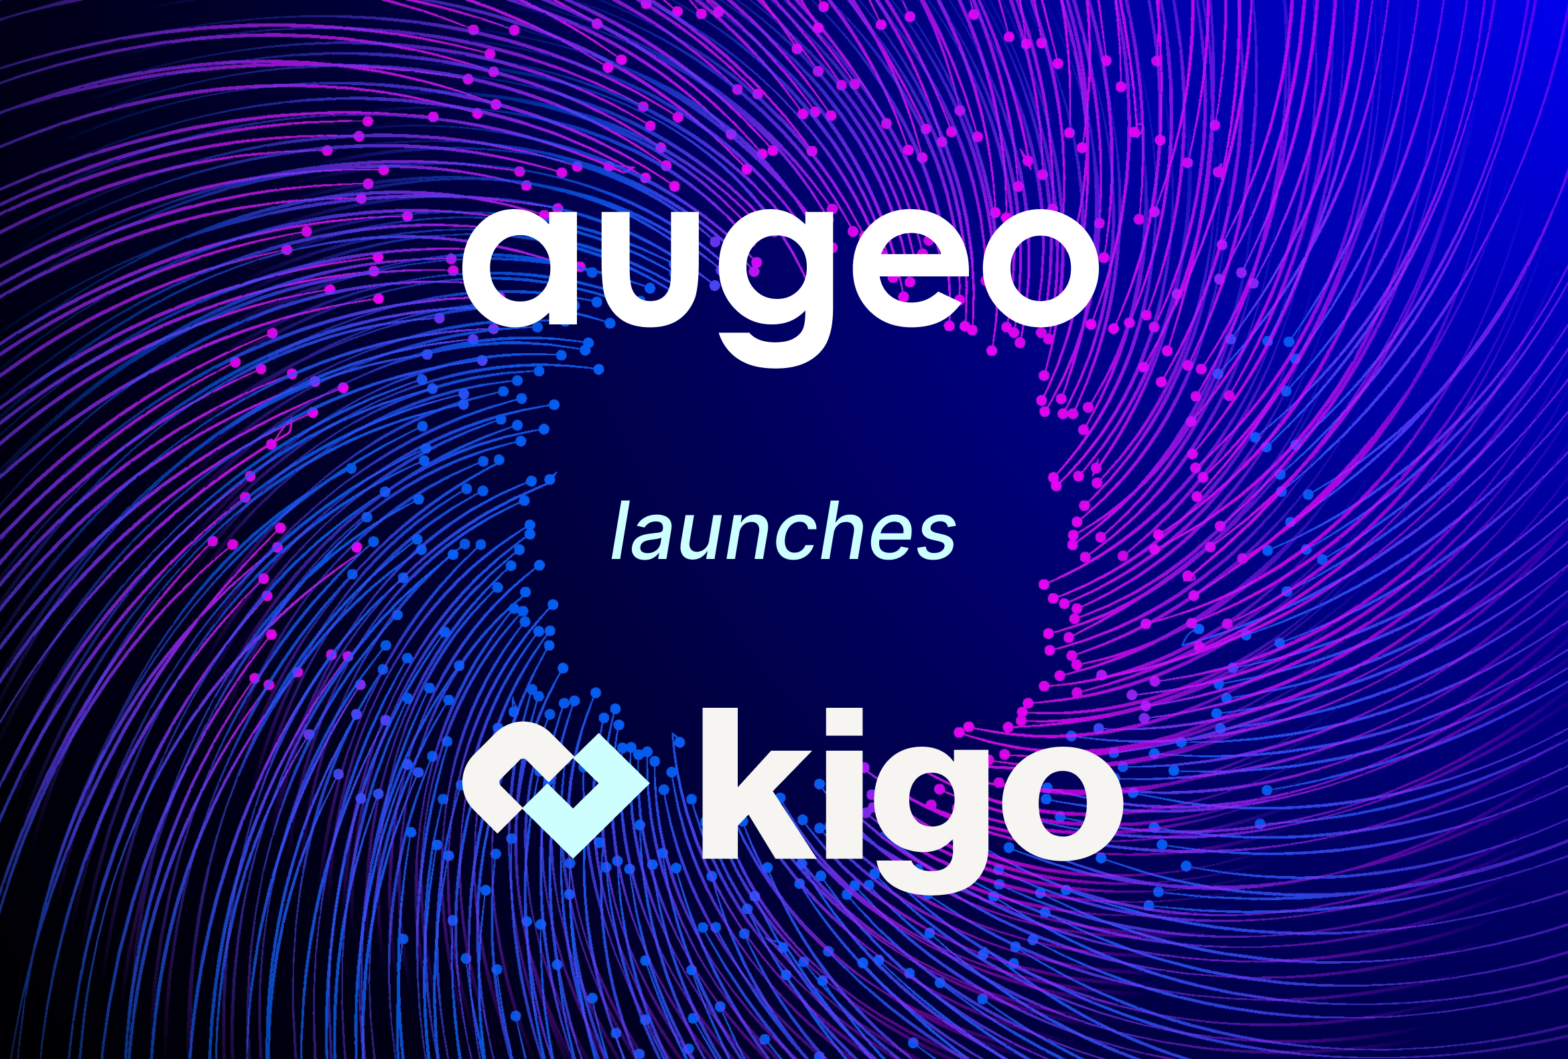 Augeo launches Kigo